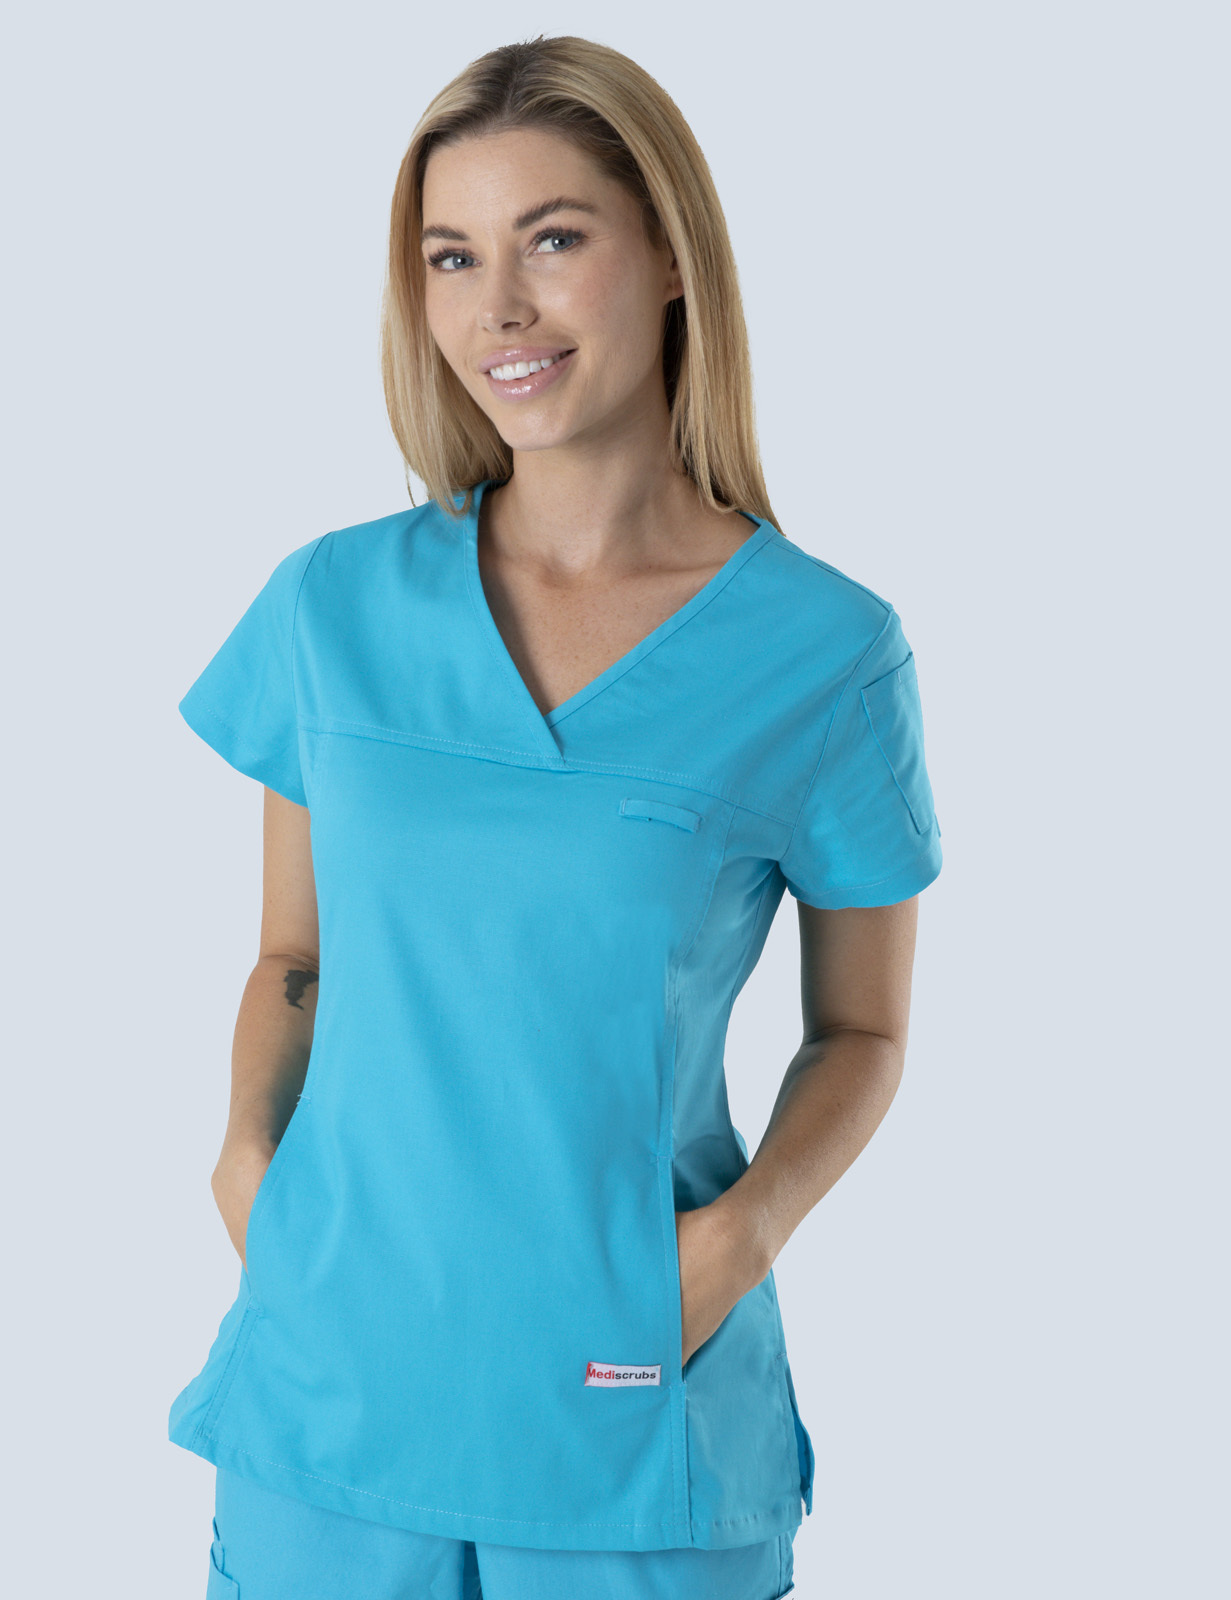 Queensland Children's Hospital Emergency Department Senior Medical Officer Uniform Top Bundle  (Women's Fit Top in Aqua  incl Logos)